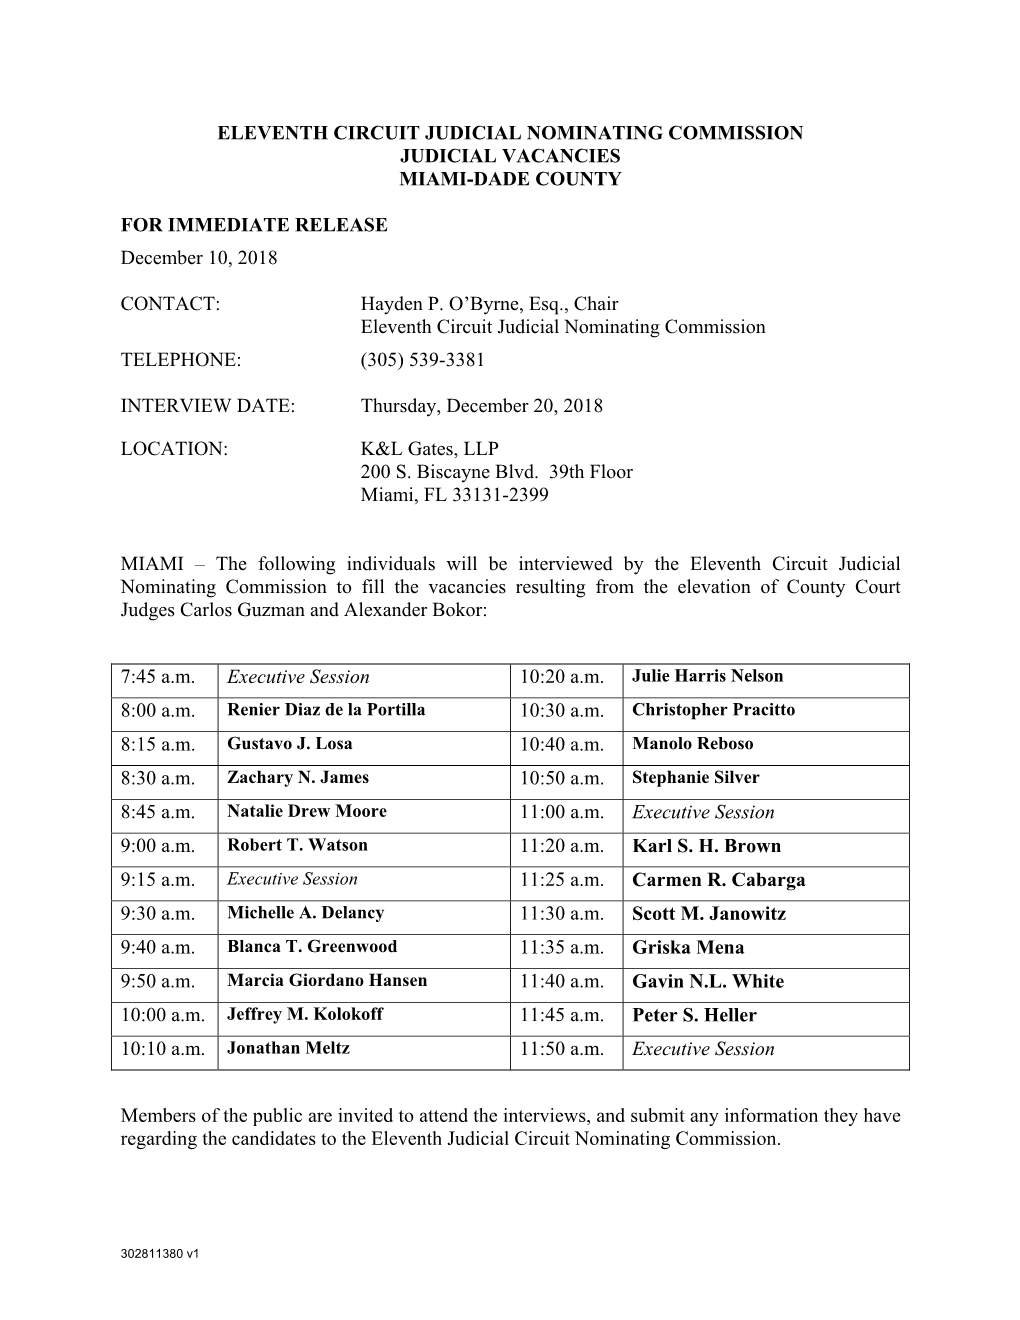 Eleventh Circuit Judicial Nominating Commission Judicial Vacancies Miami-Dade County